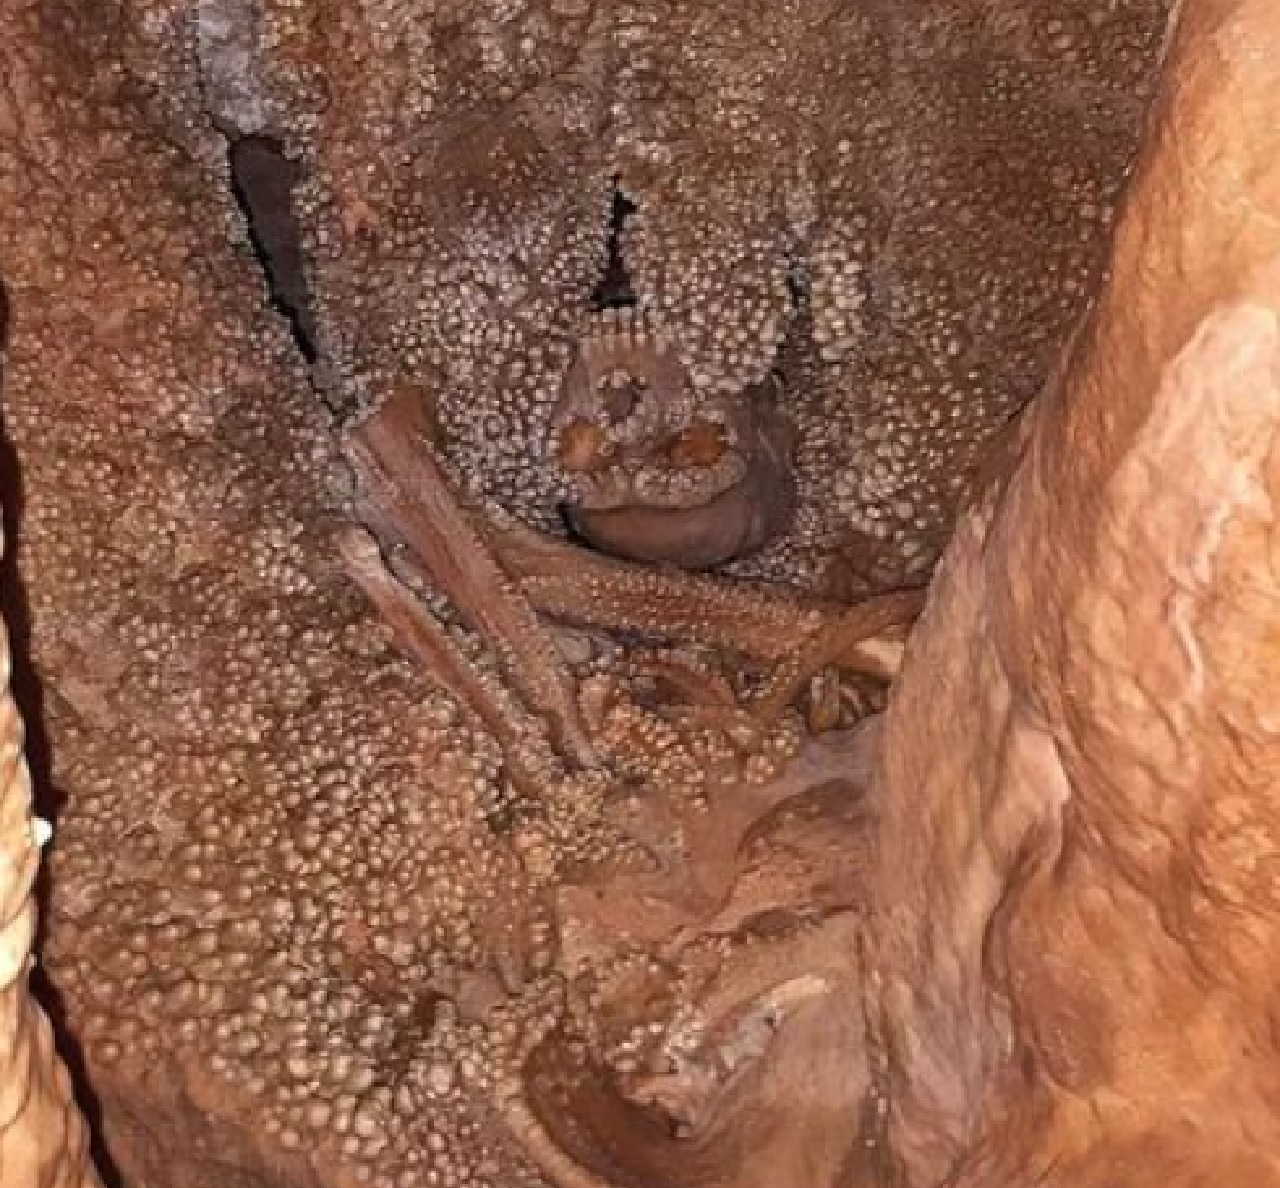 L'Uomo di Altamura grotta Puglia